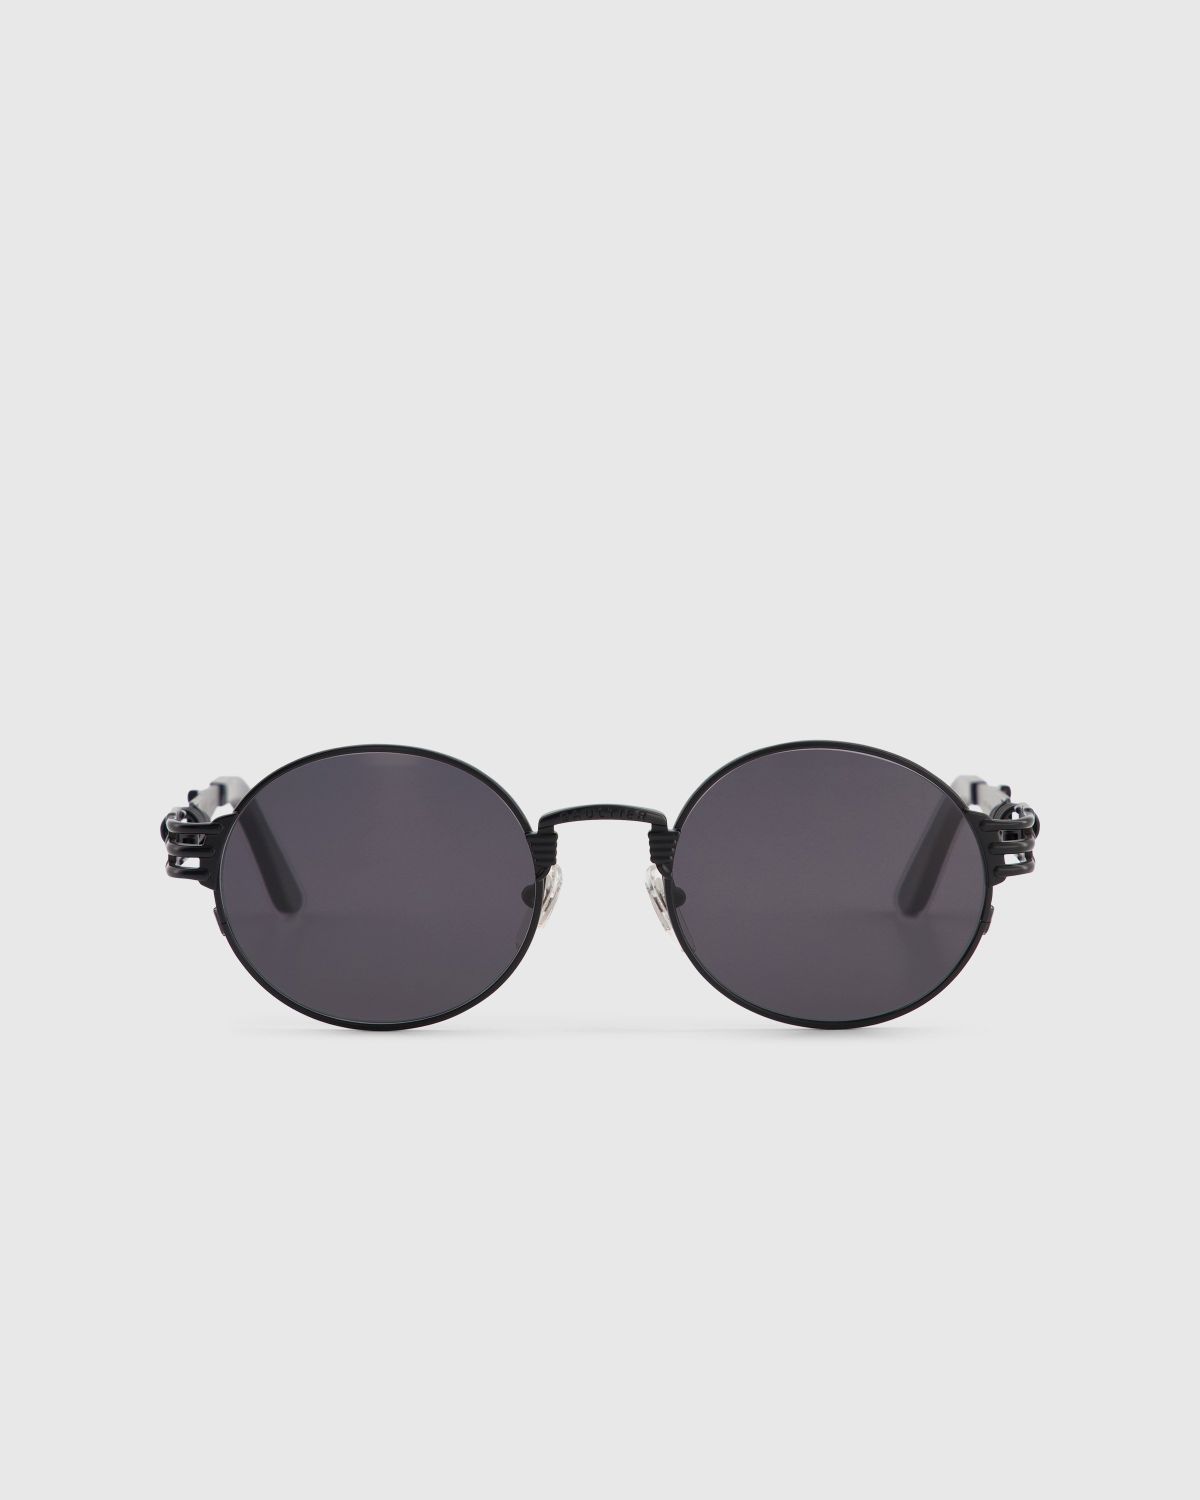 Jean Paul Gaultier Burna Boy – Double Resort Sunglasses Black Highsnobiety